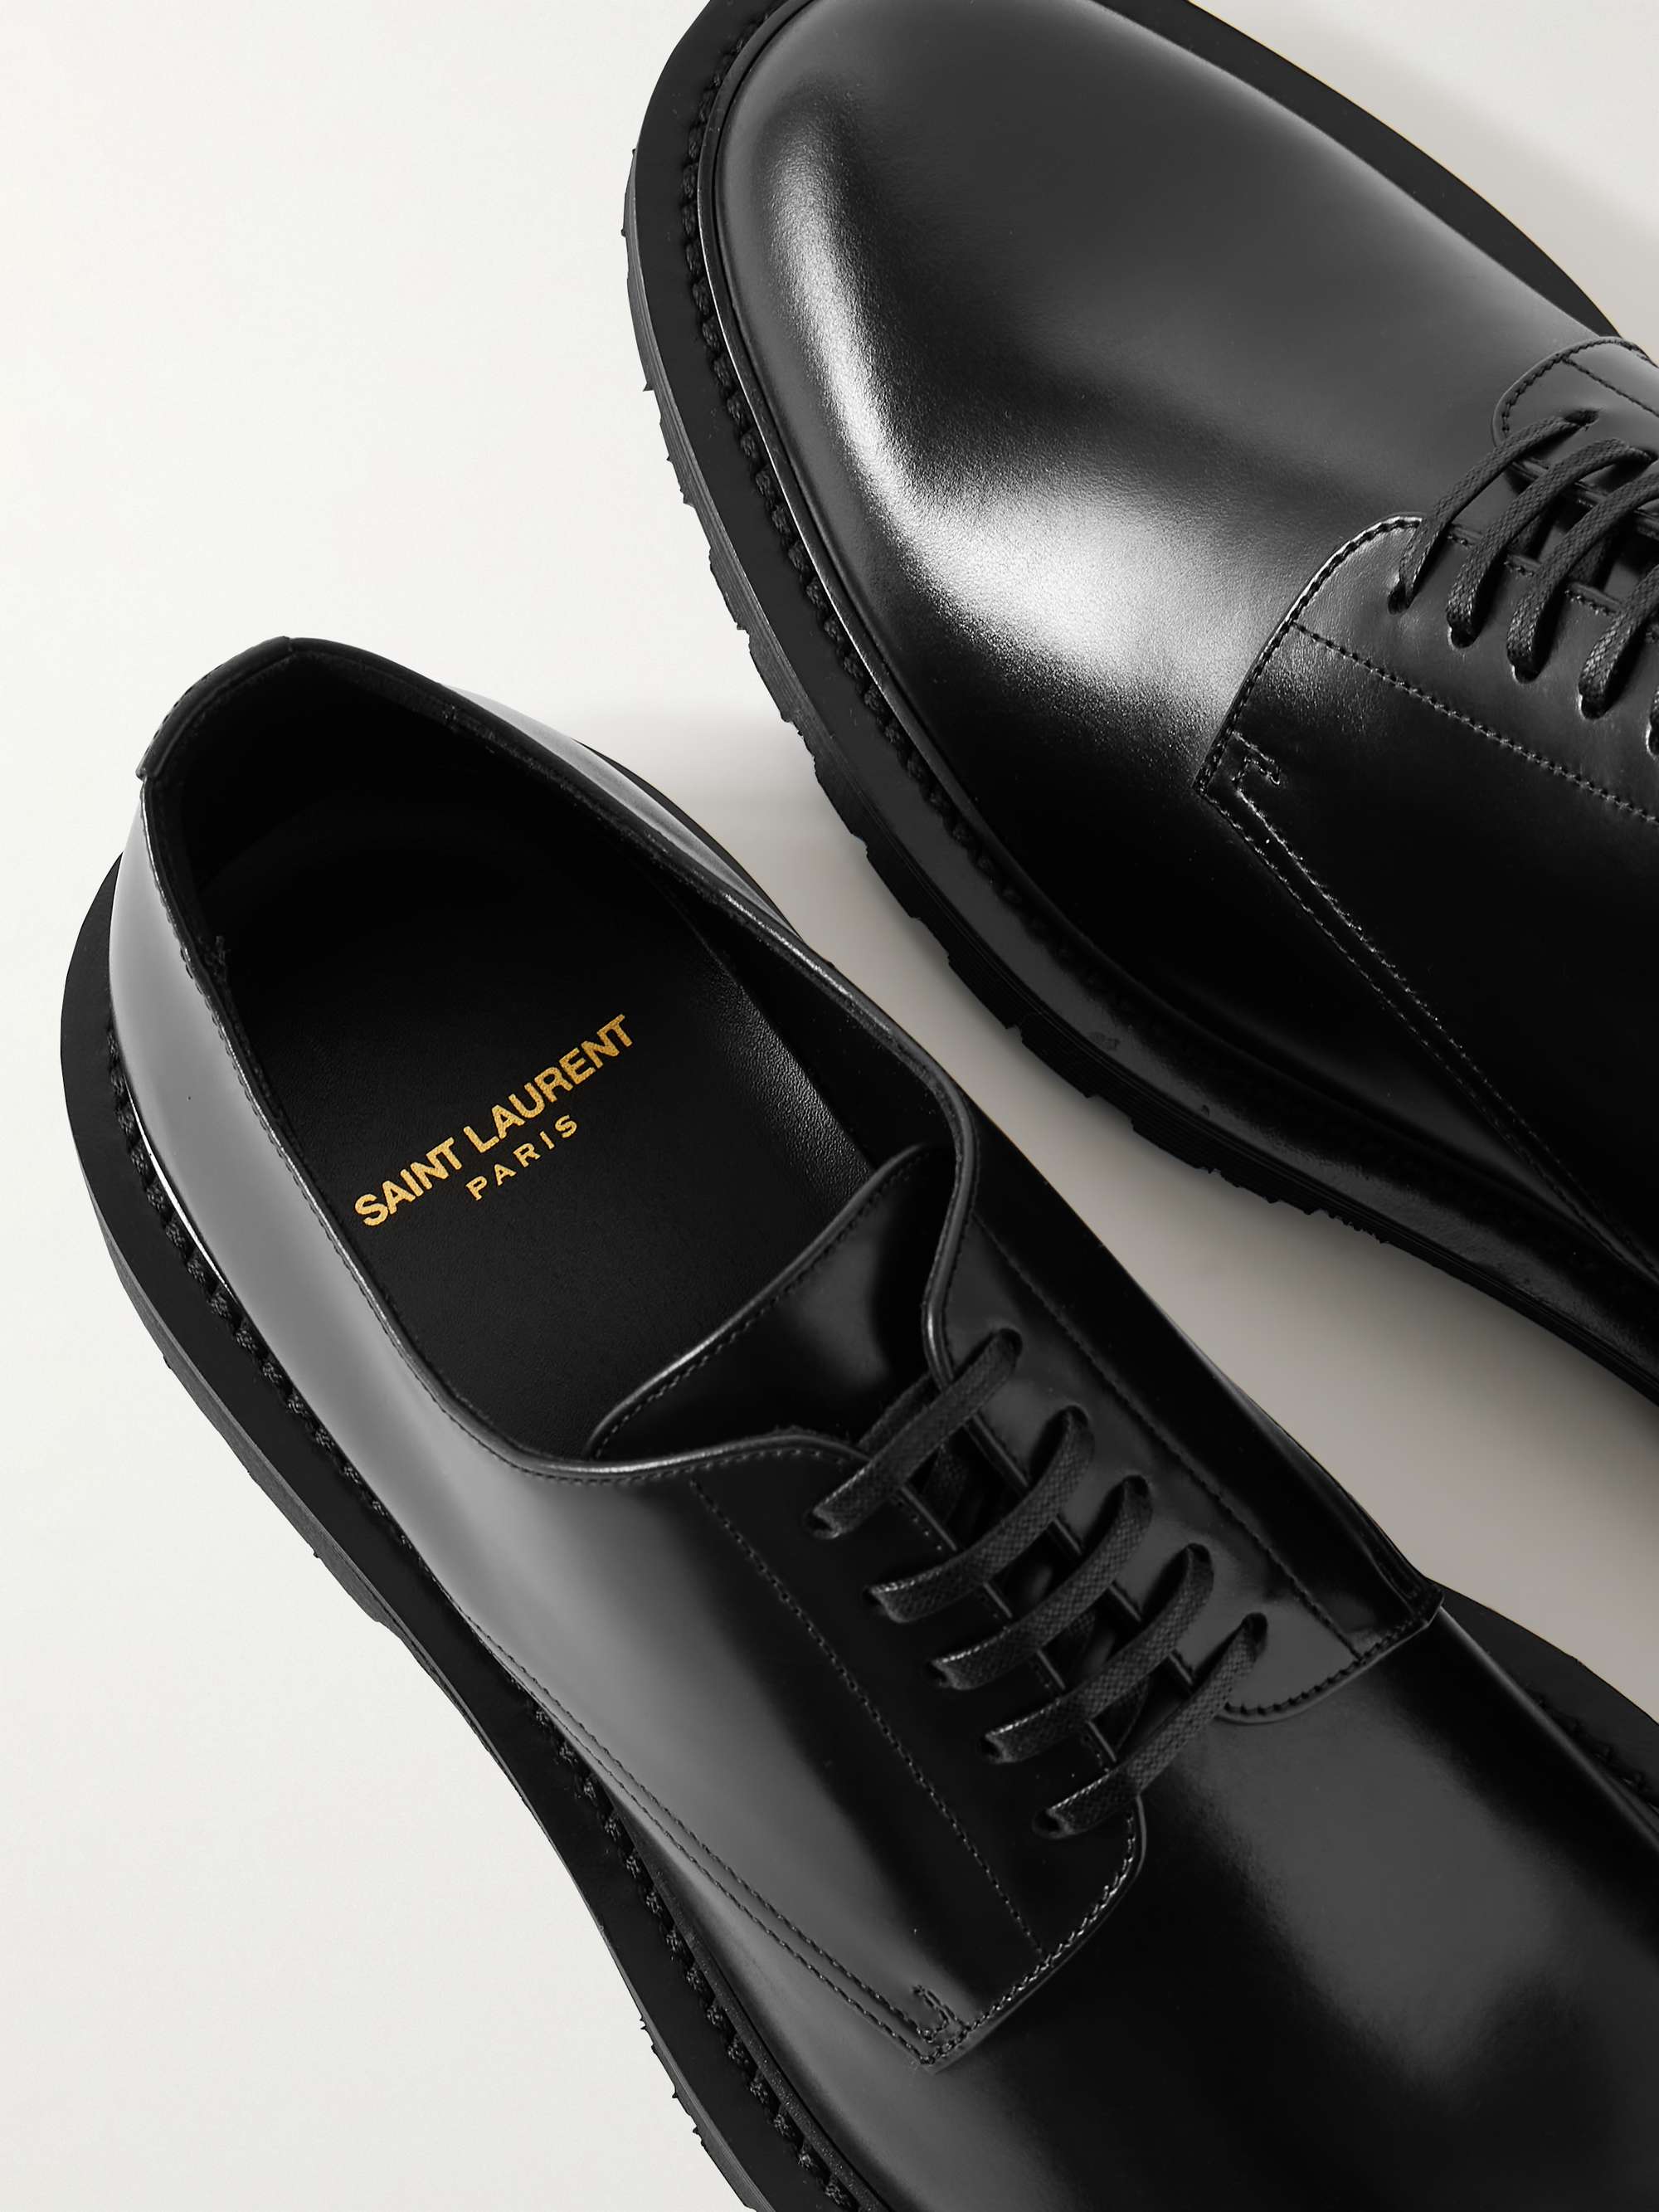 SAINT LAURENT Leather Derby Shoes for Men | MR PORTER